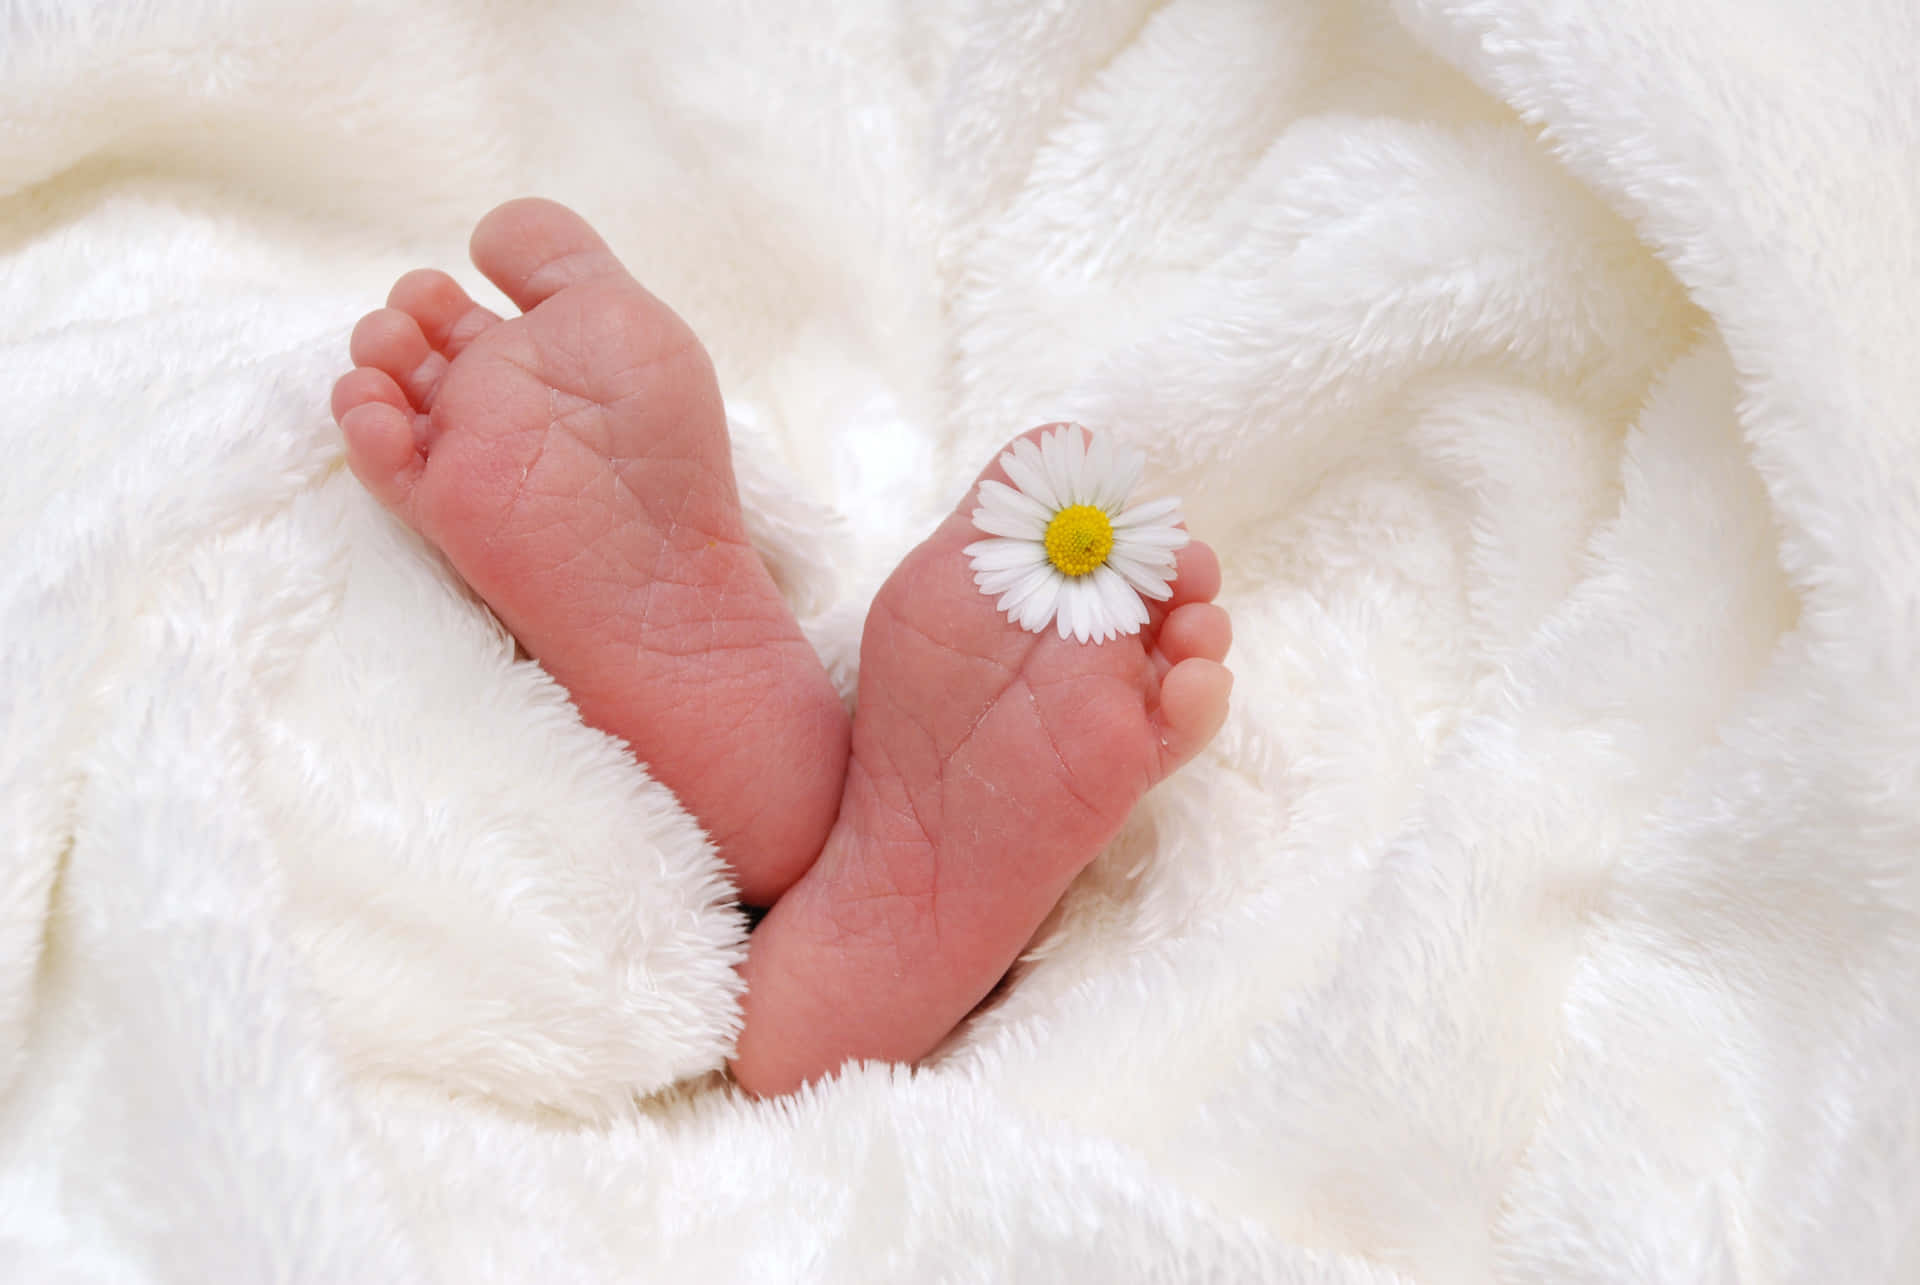 Newborn Baby Feet In White Blanket With Daisy